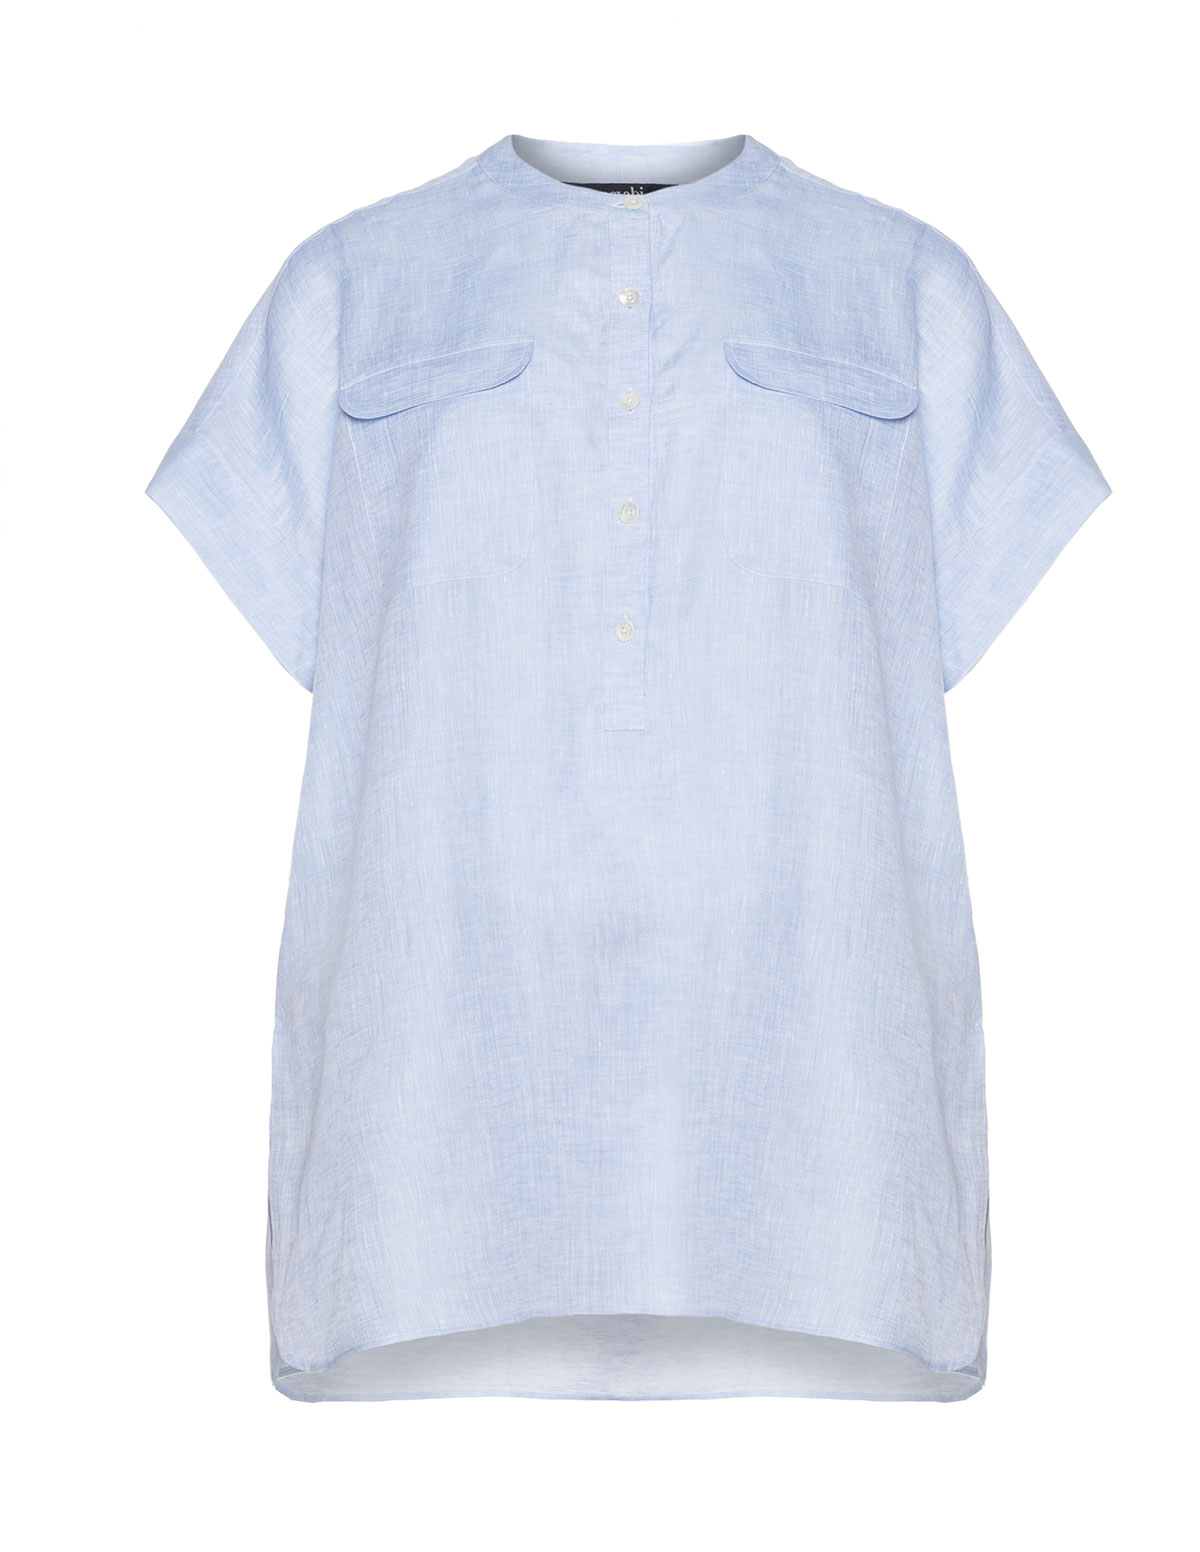 Linen blouse by
navabi